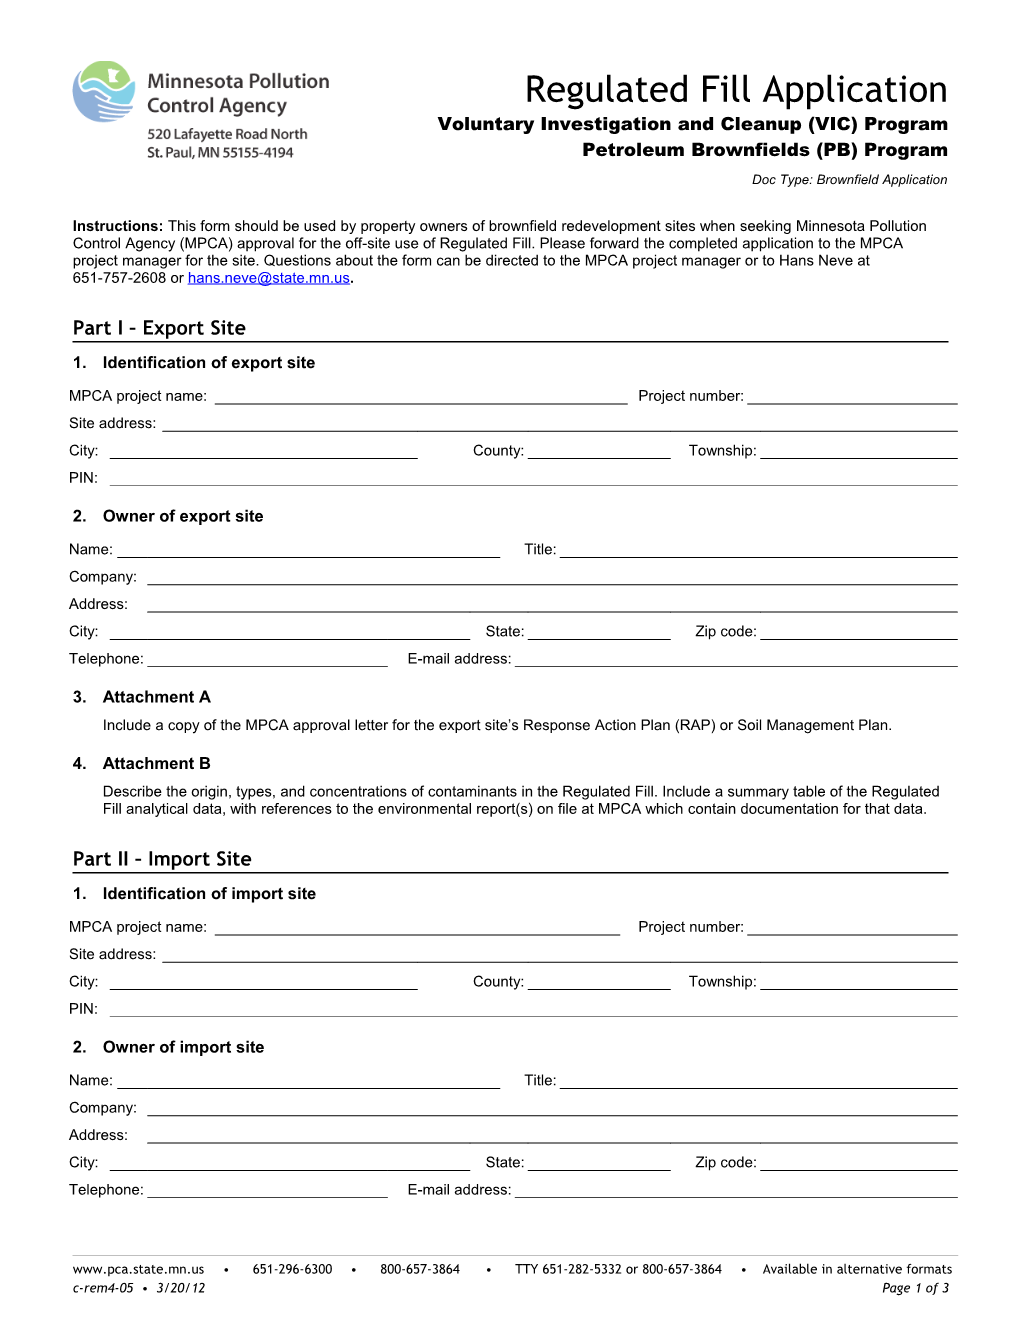 Regulated Fill Application - Form